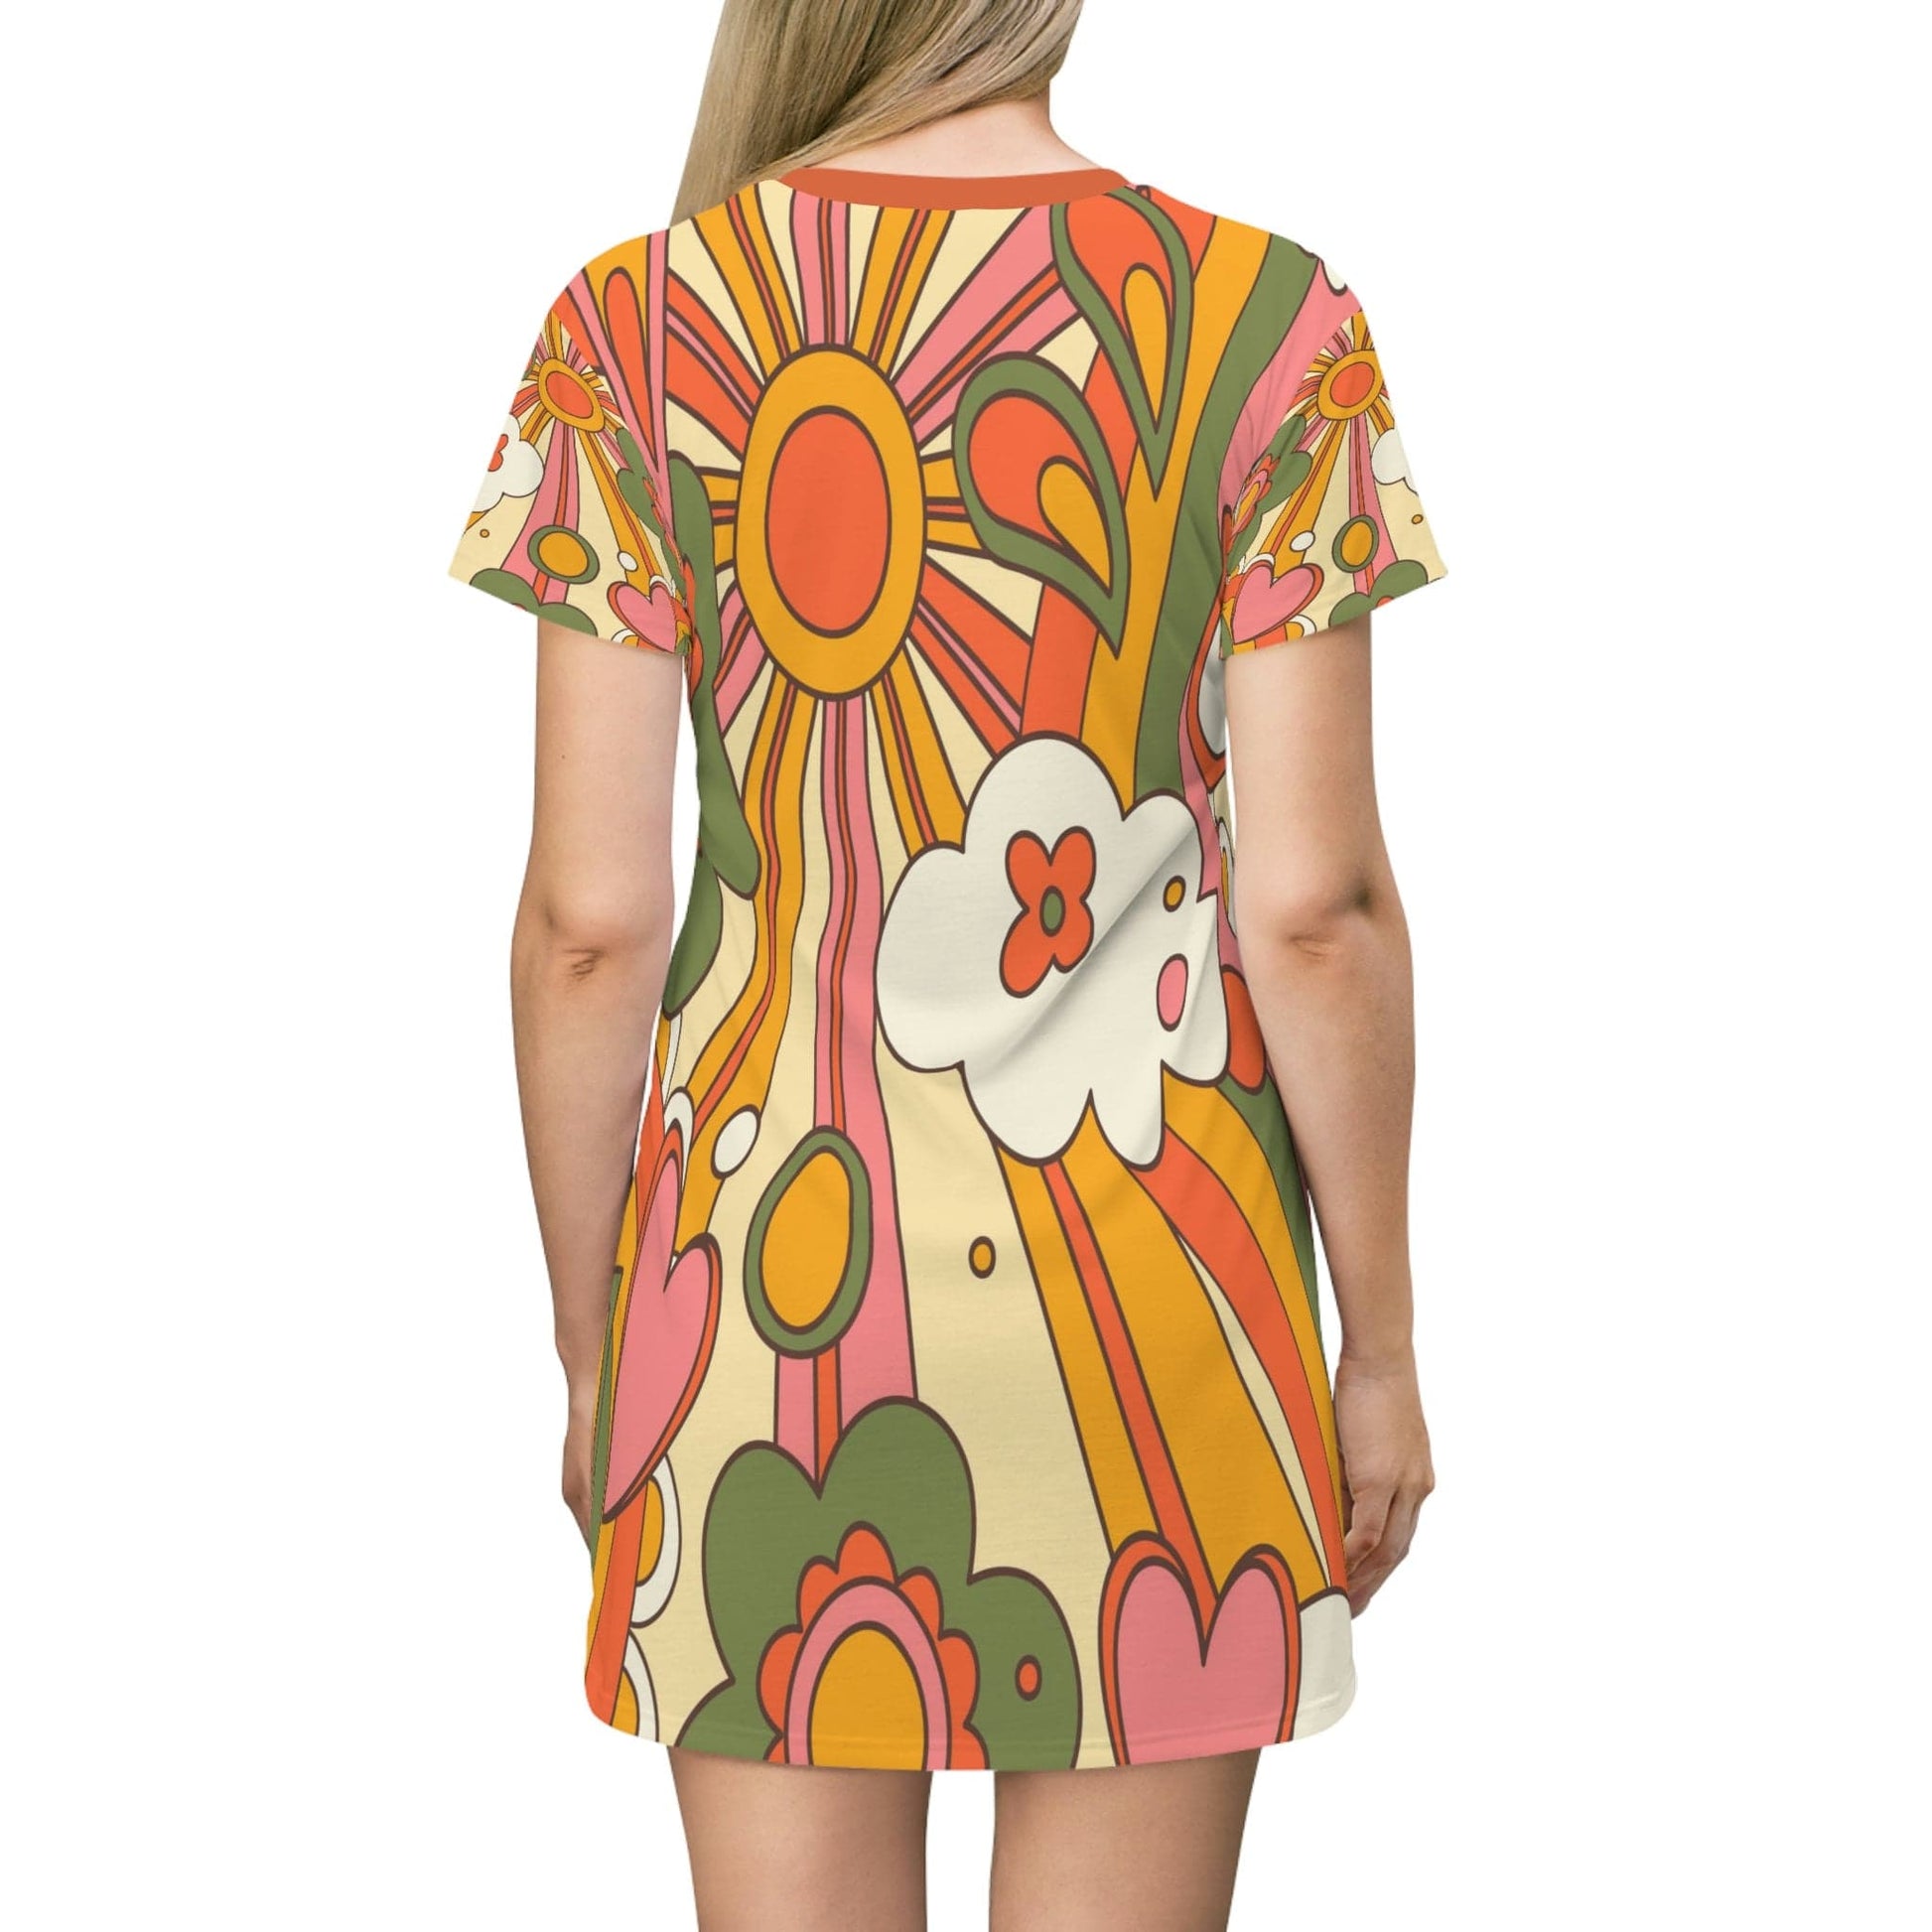 Kate McEnroe New York Retro Groovy Hippie 70s Sunburst T-Shirt Dress in Mid Century Modern Burnt Orange, Mustard Yellow, Green, Summer Party Dress, Hippie Gifts T-Shirt Dress S 23882618526880173861